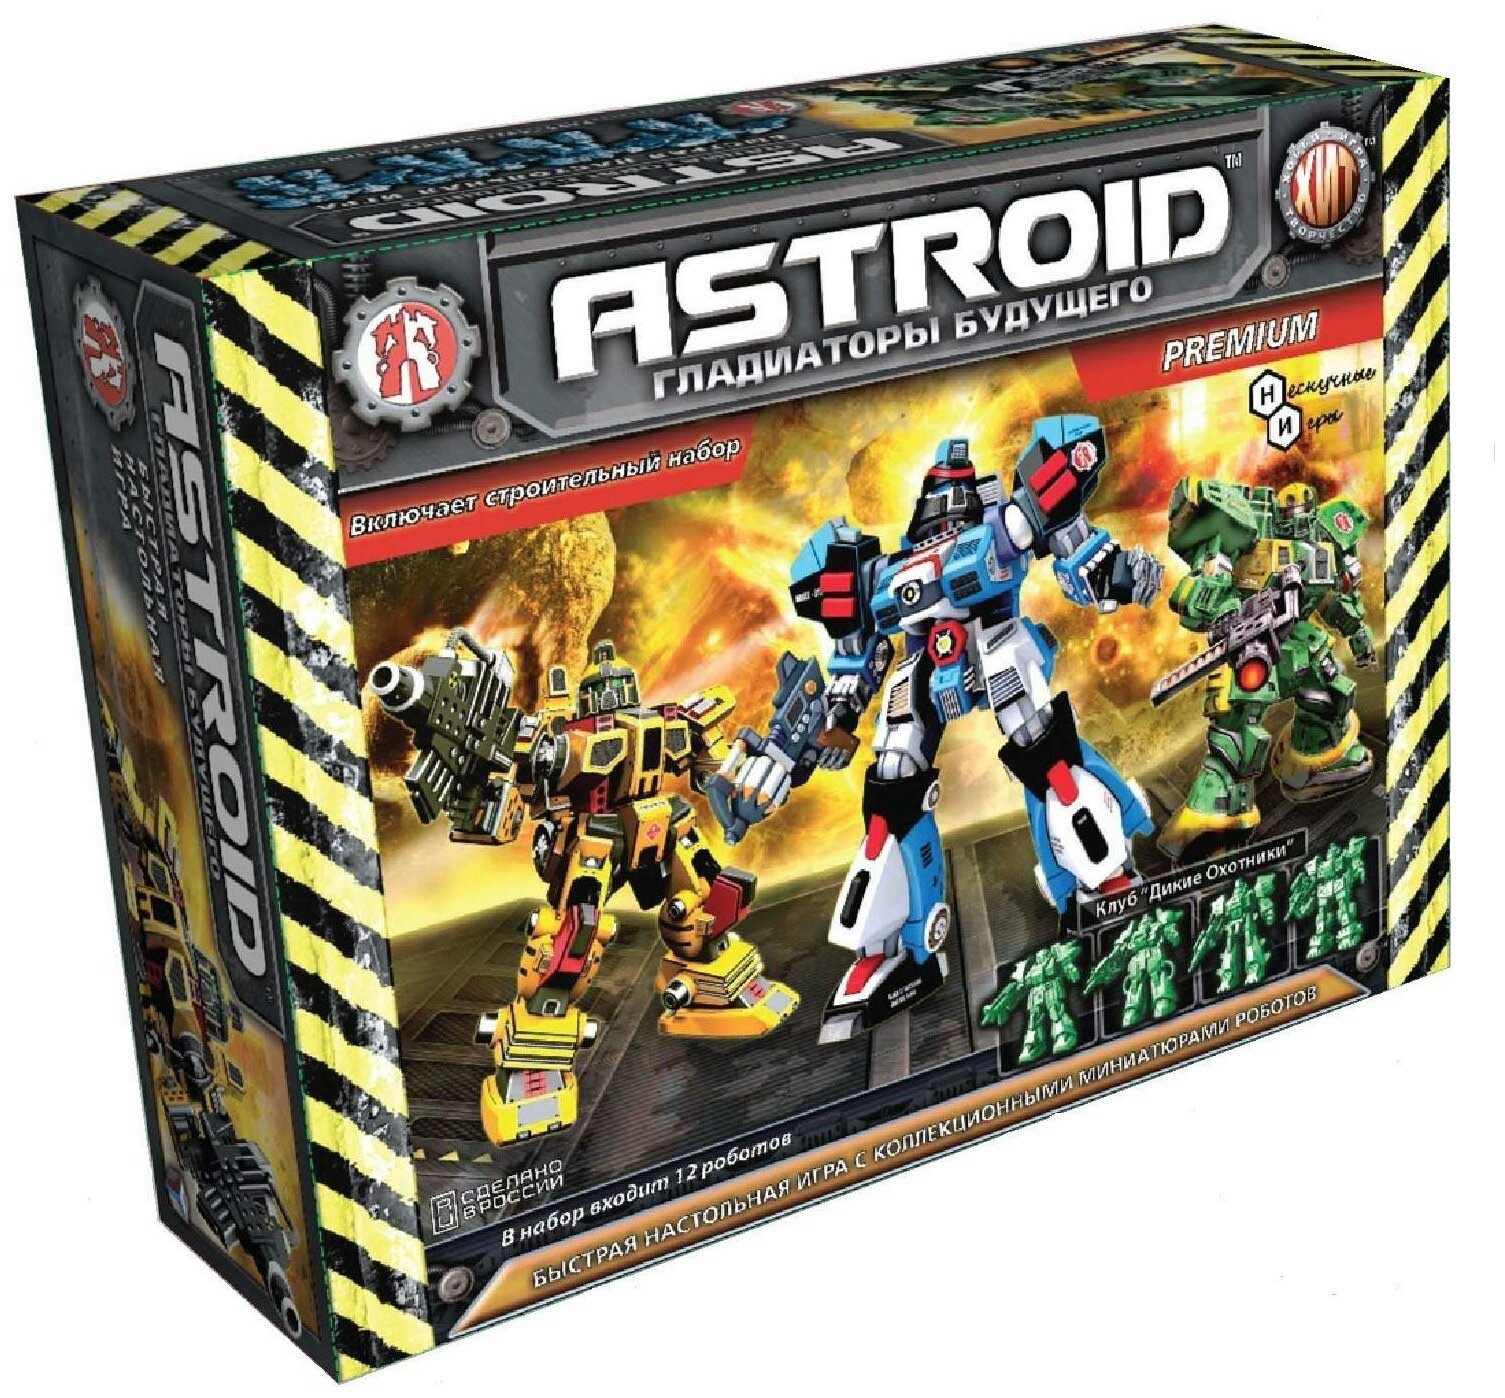 технолог игровой набор astroid premium большой набор Игровой набор Технолог ASTROID. Premium арт.00359